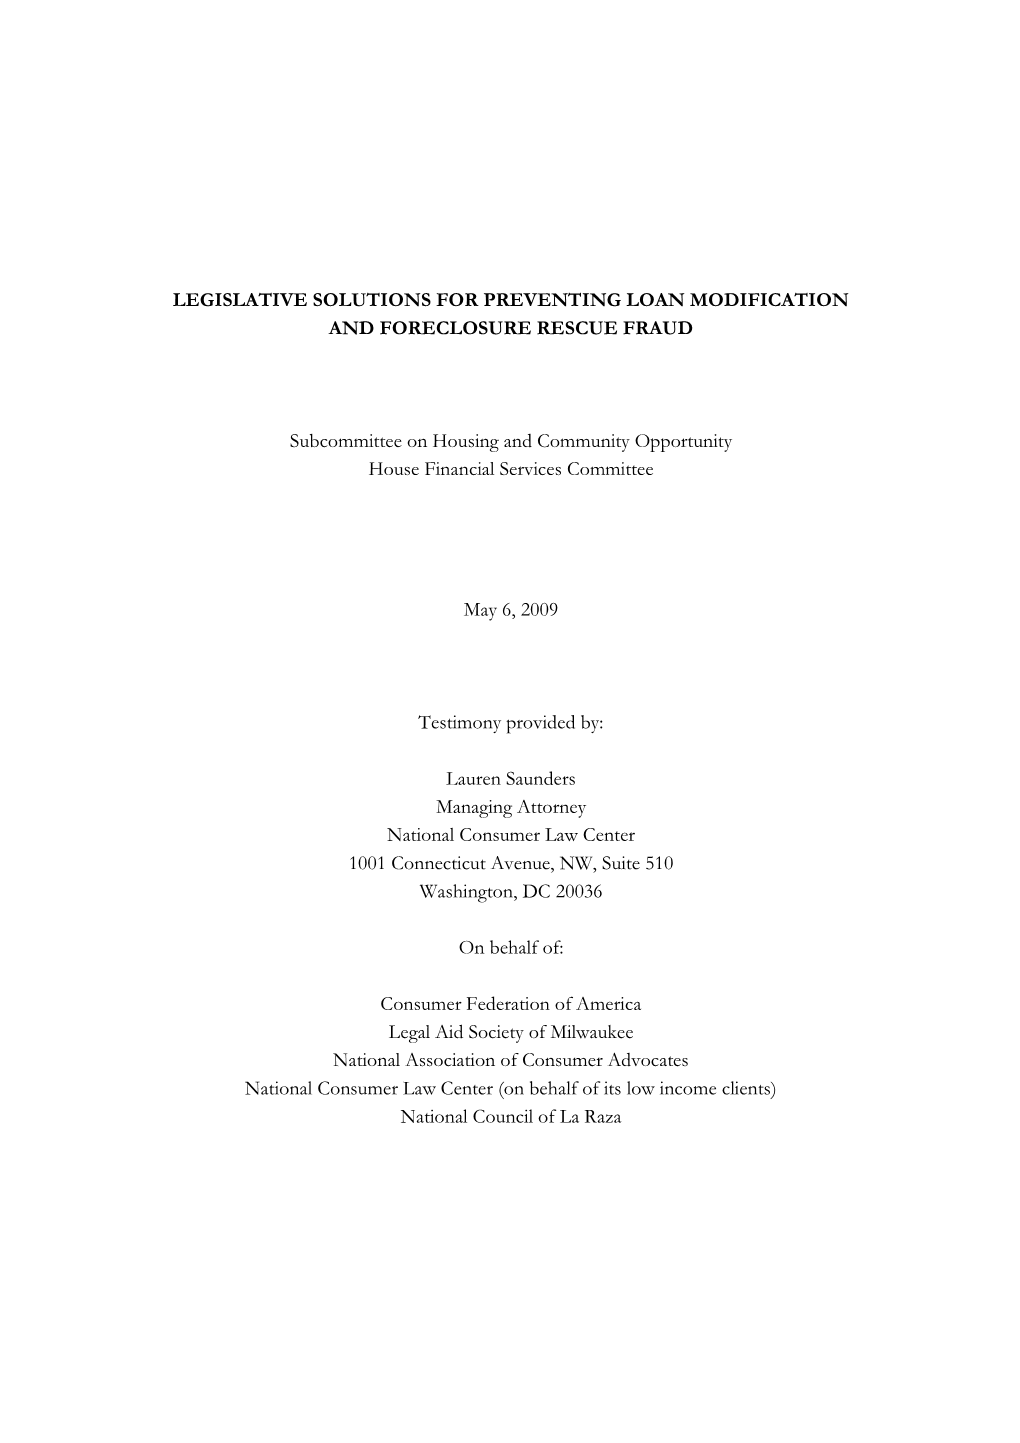 Legislative Solutions for Preventing Loan Modification and Foreclosure Rescue Fraud